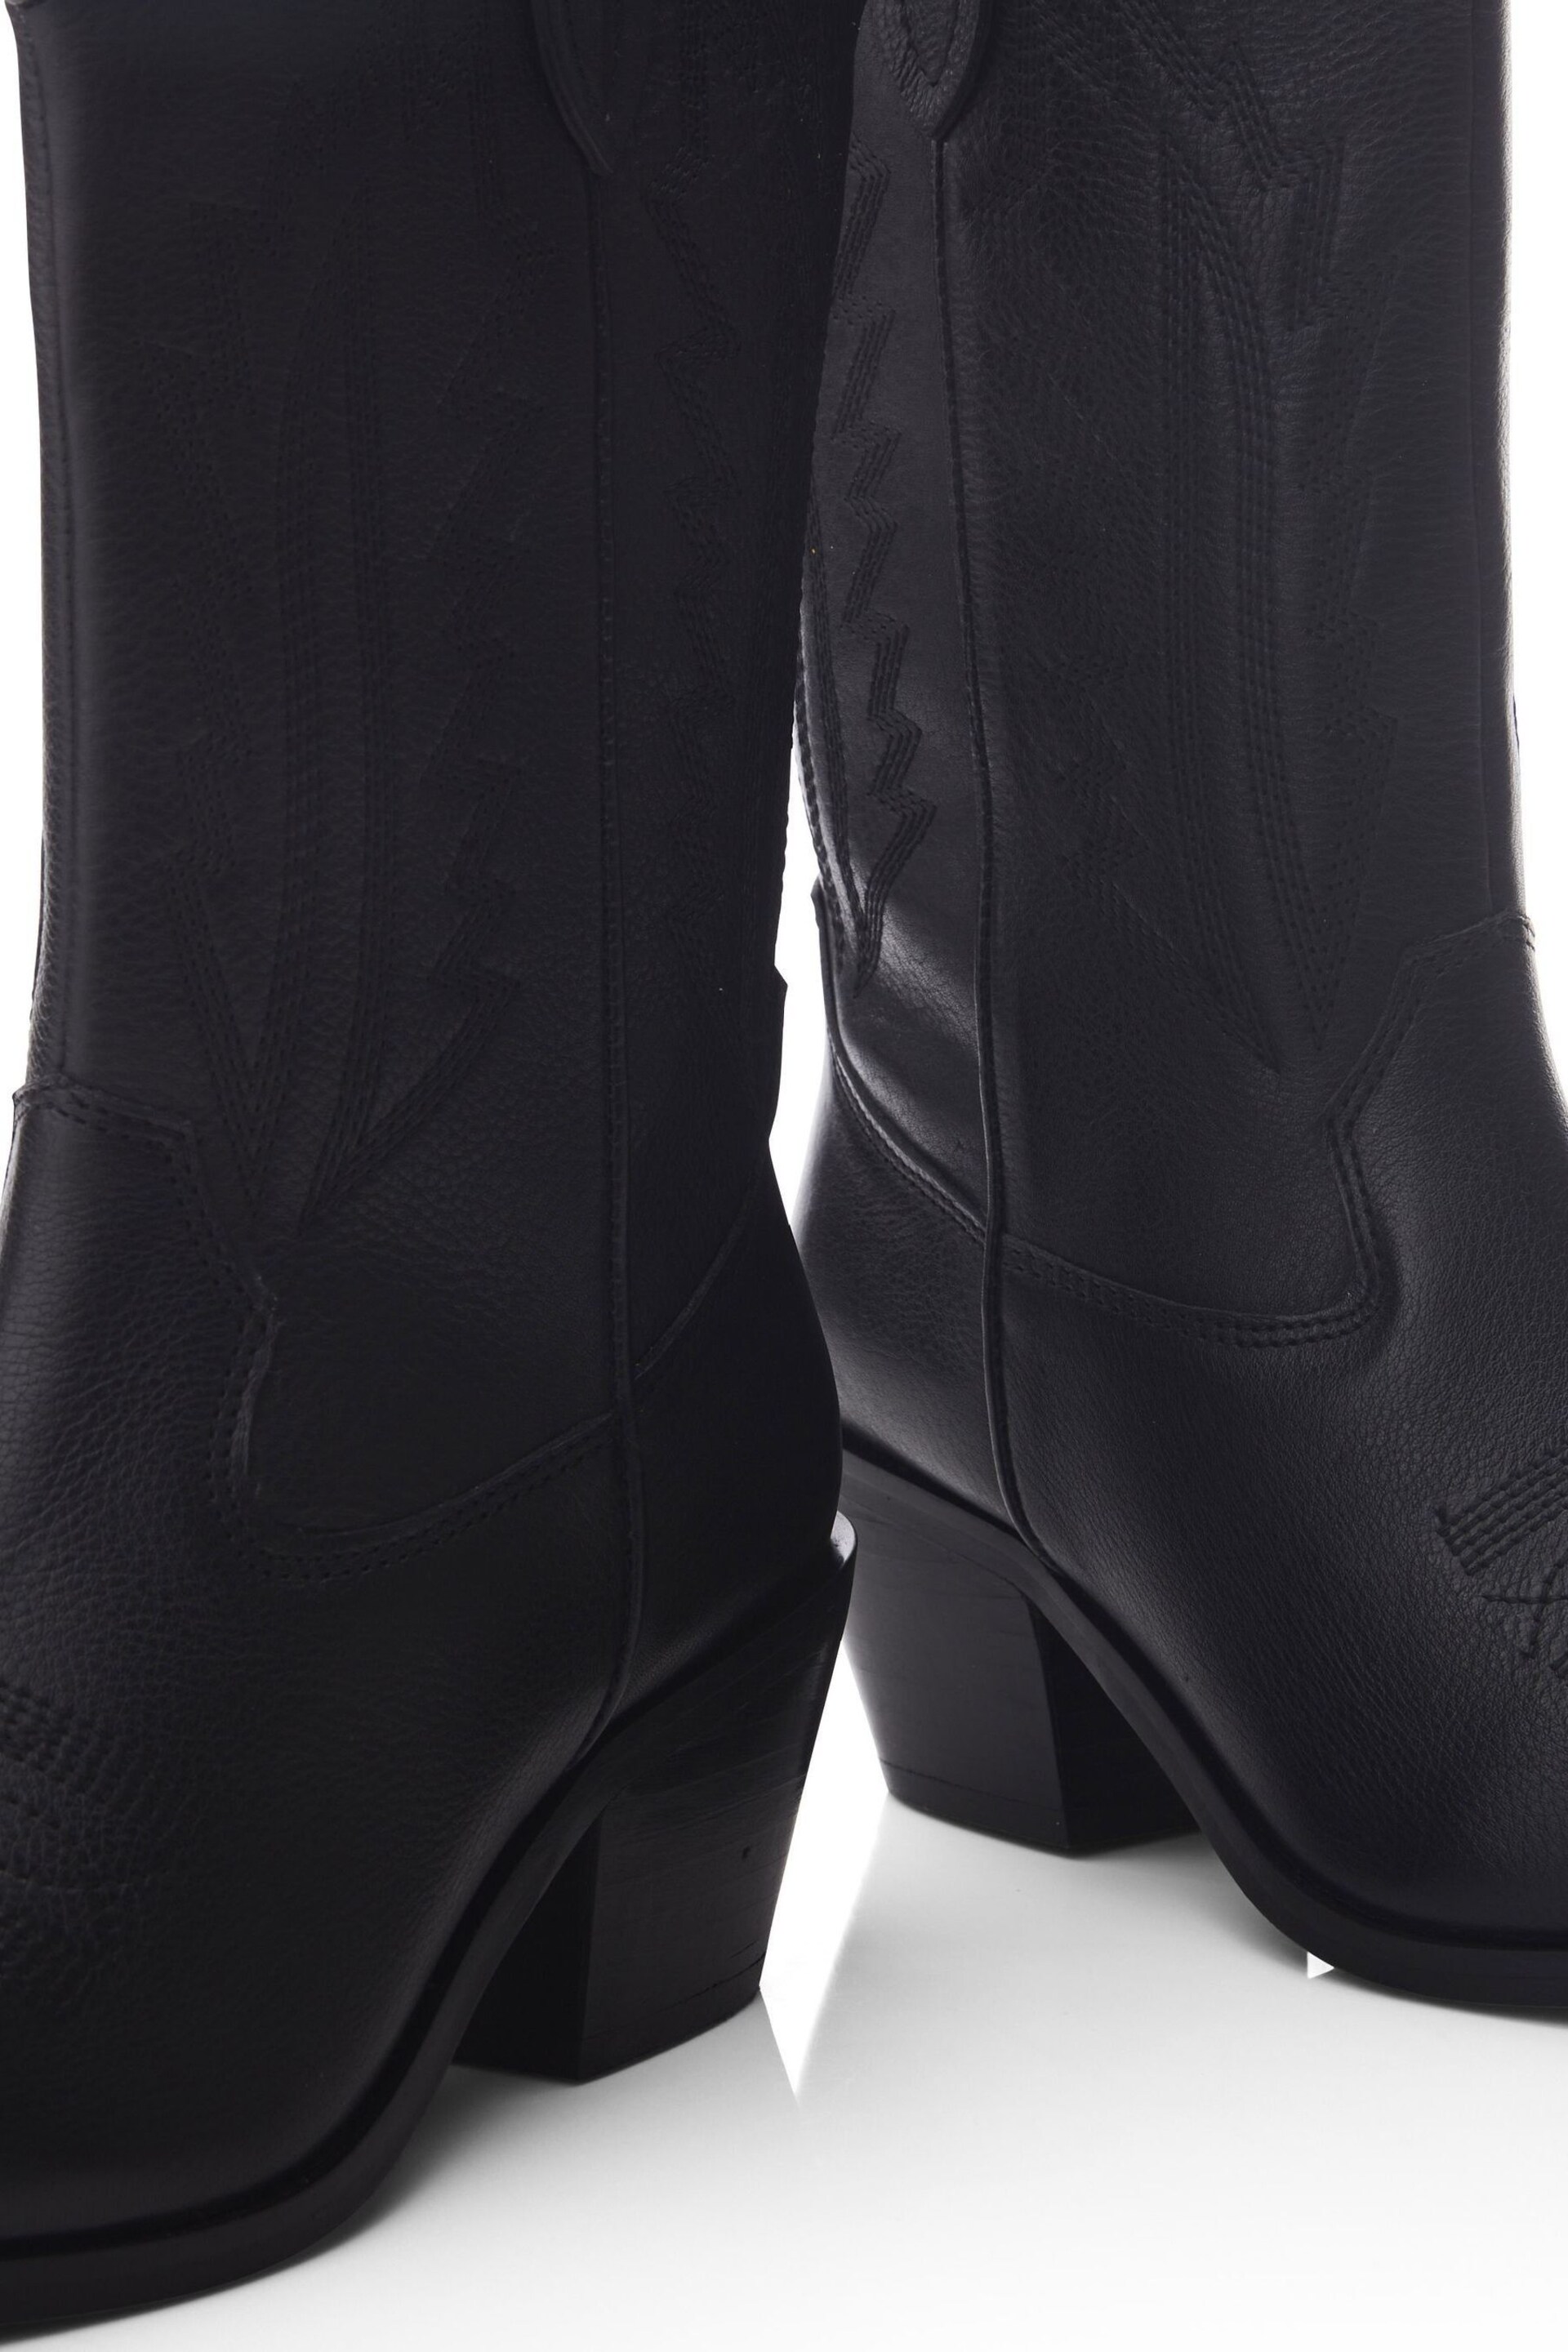 Moda in Pelle Heston Calf Height Western Black Boots - Image 4 of 4